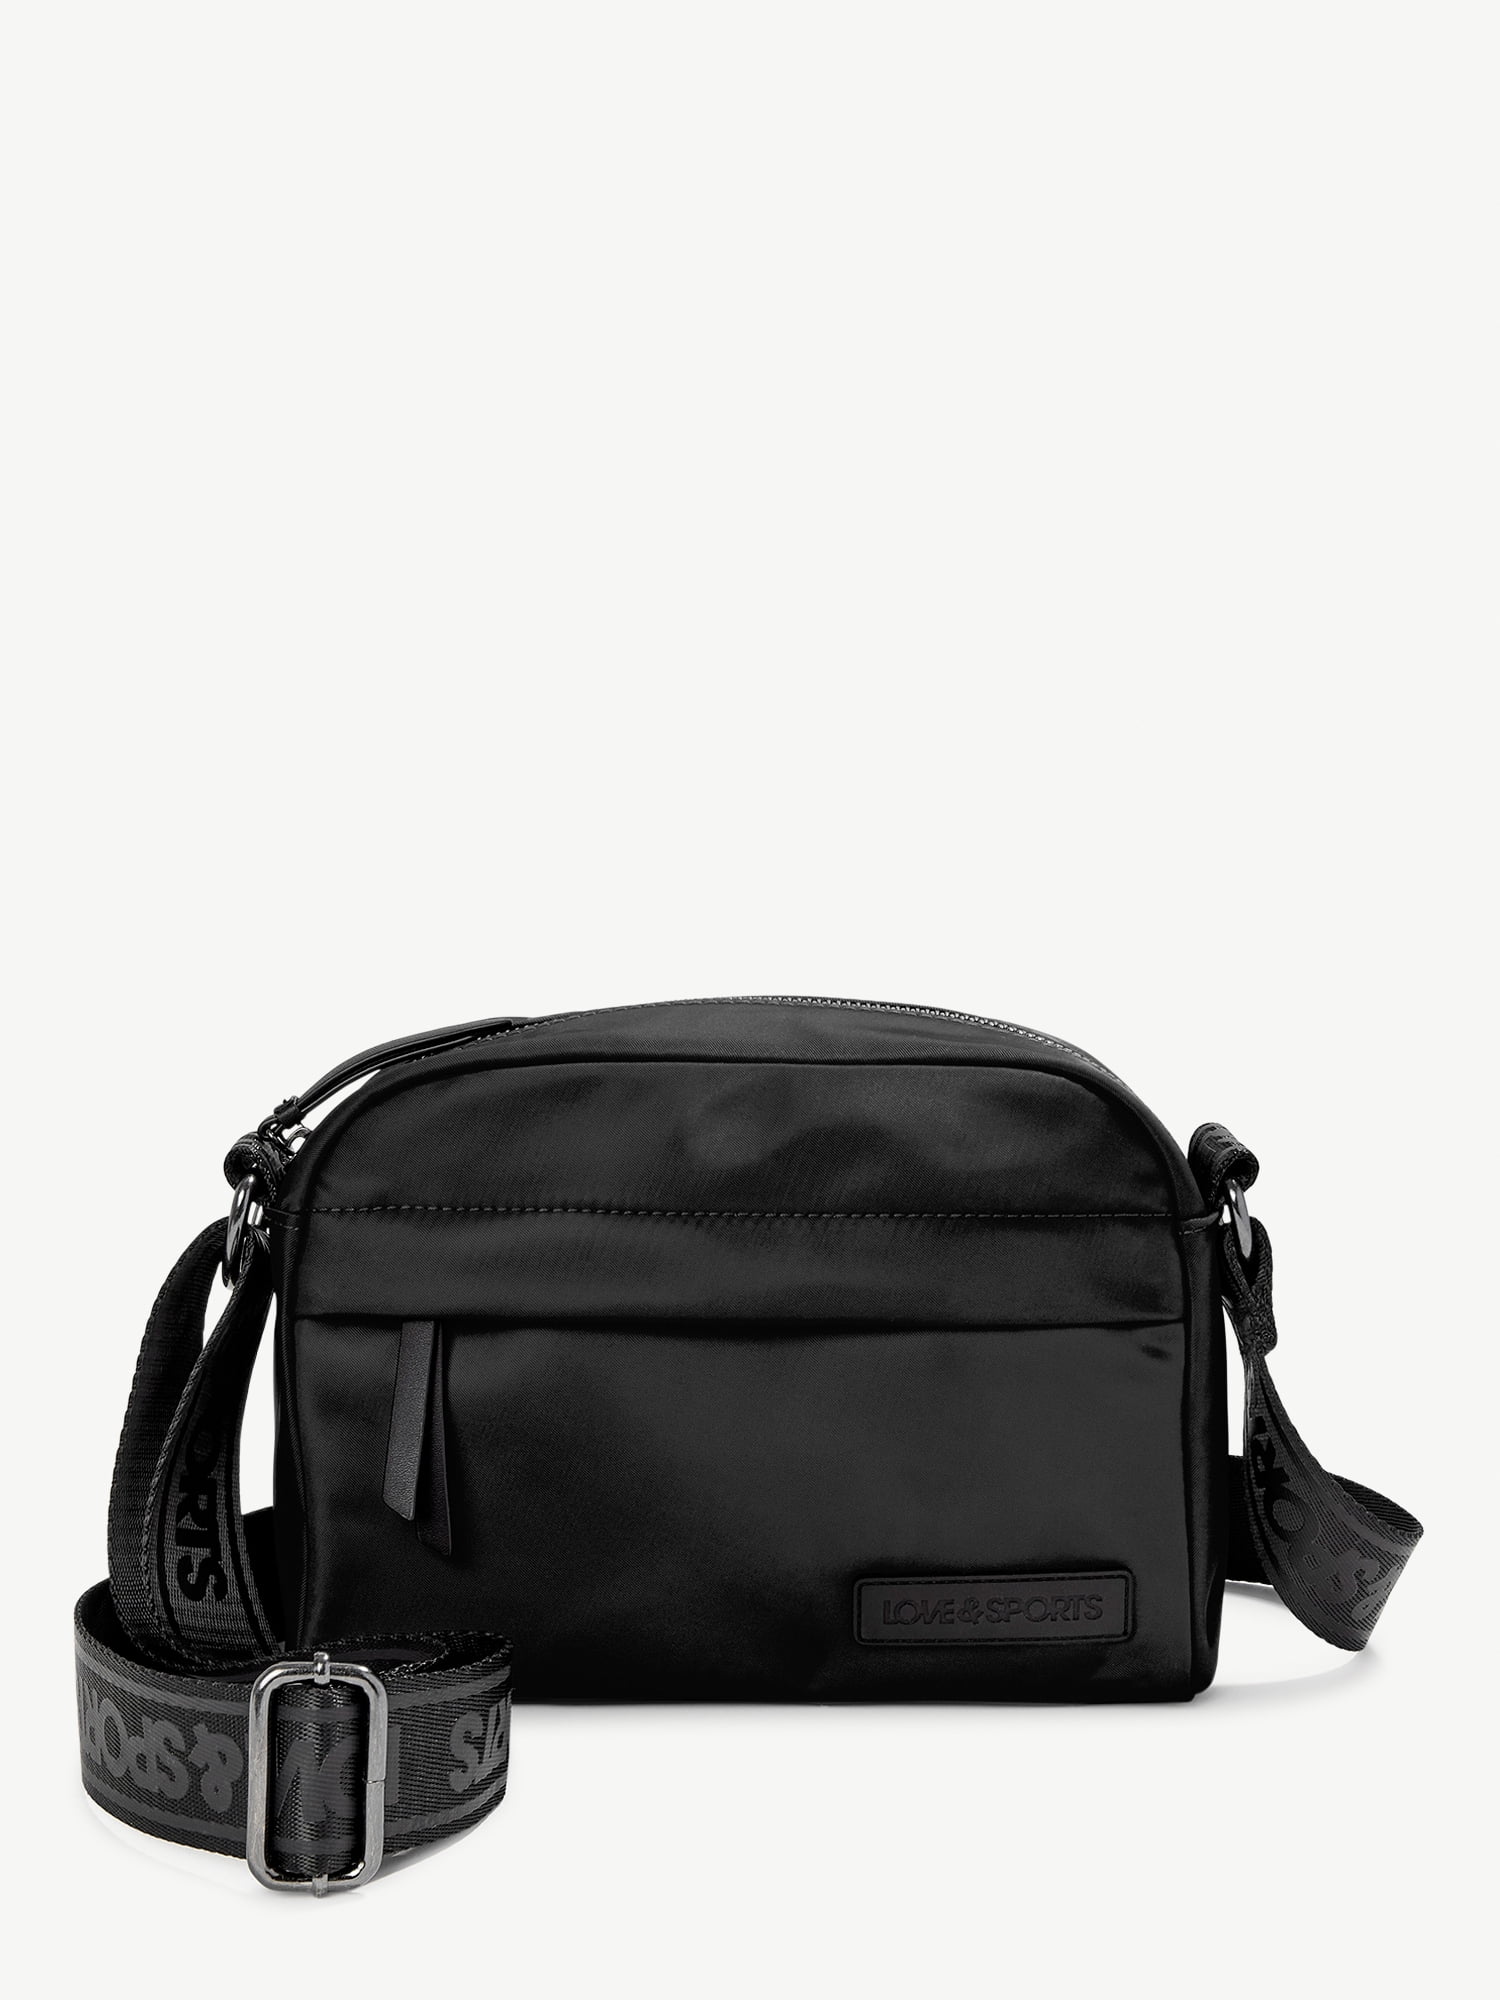 Small Leather Crossbody Purses for Women, Multi Pocket Shoulder Bag Zipper  Purse and Handbags,Red - Walmart.com